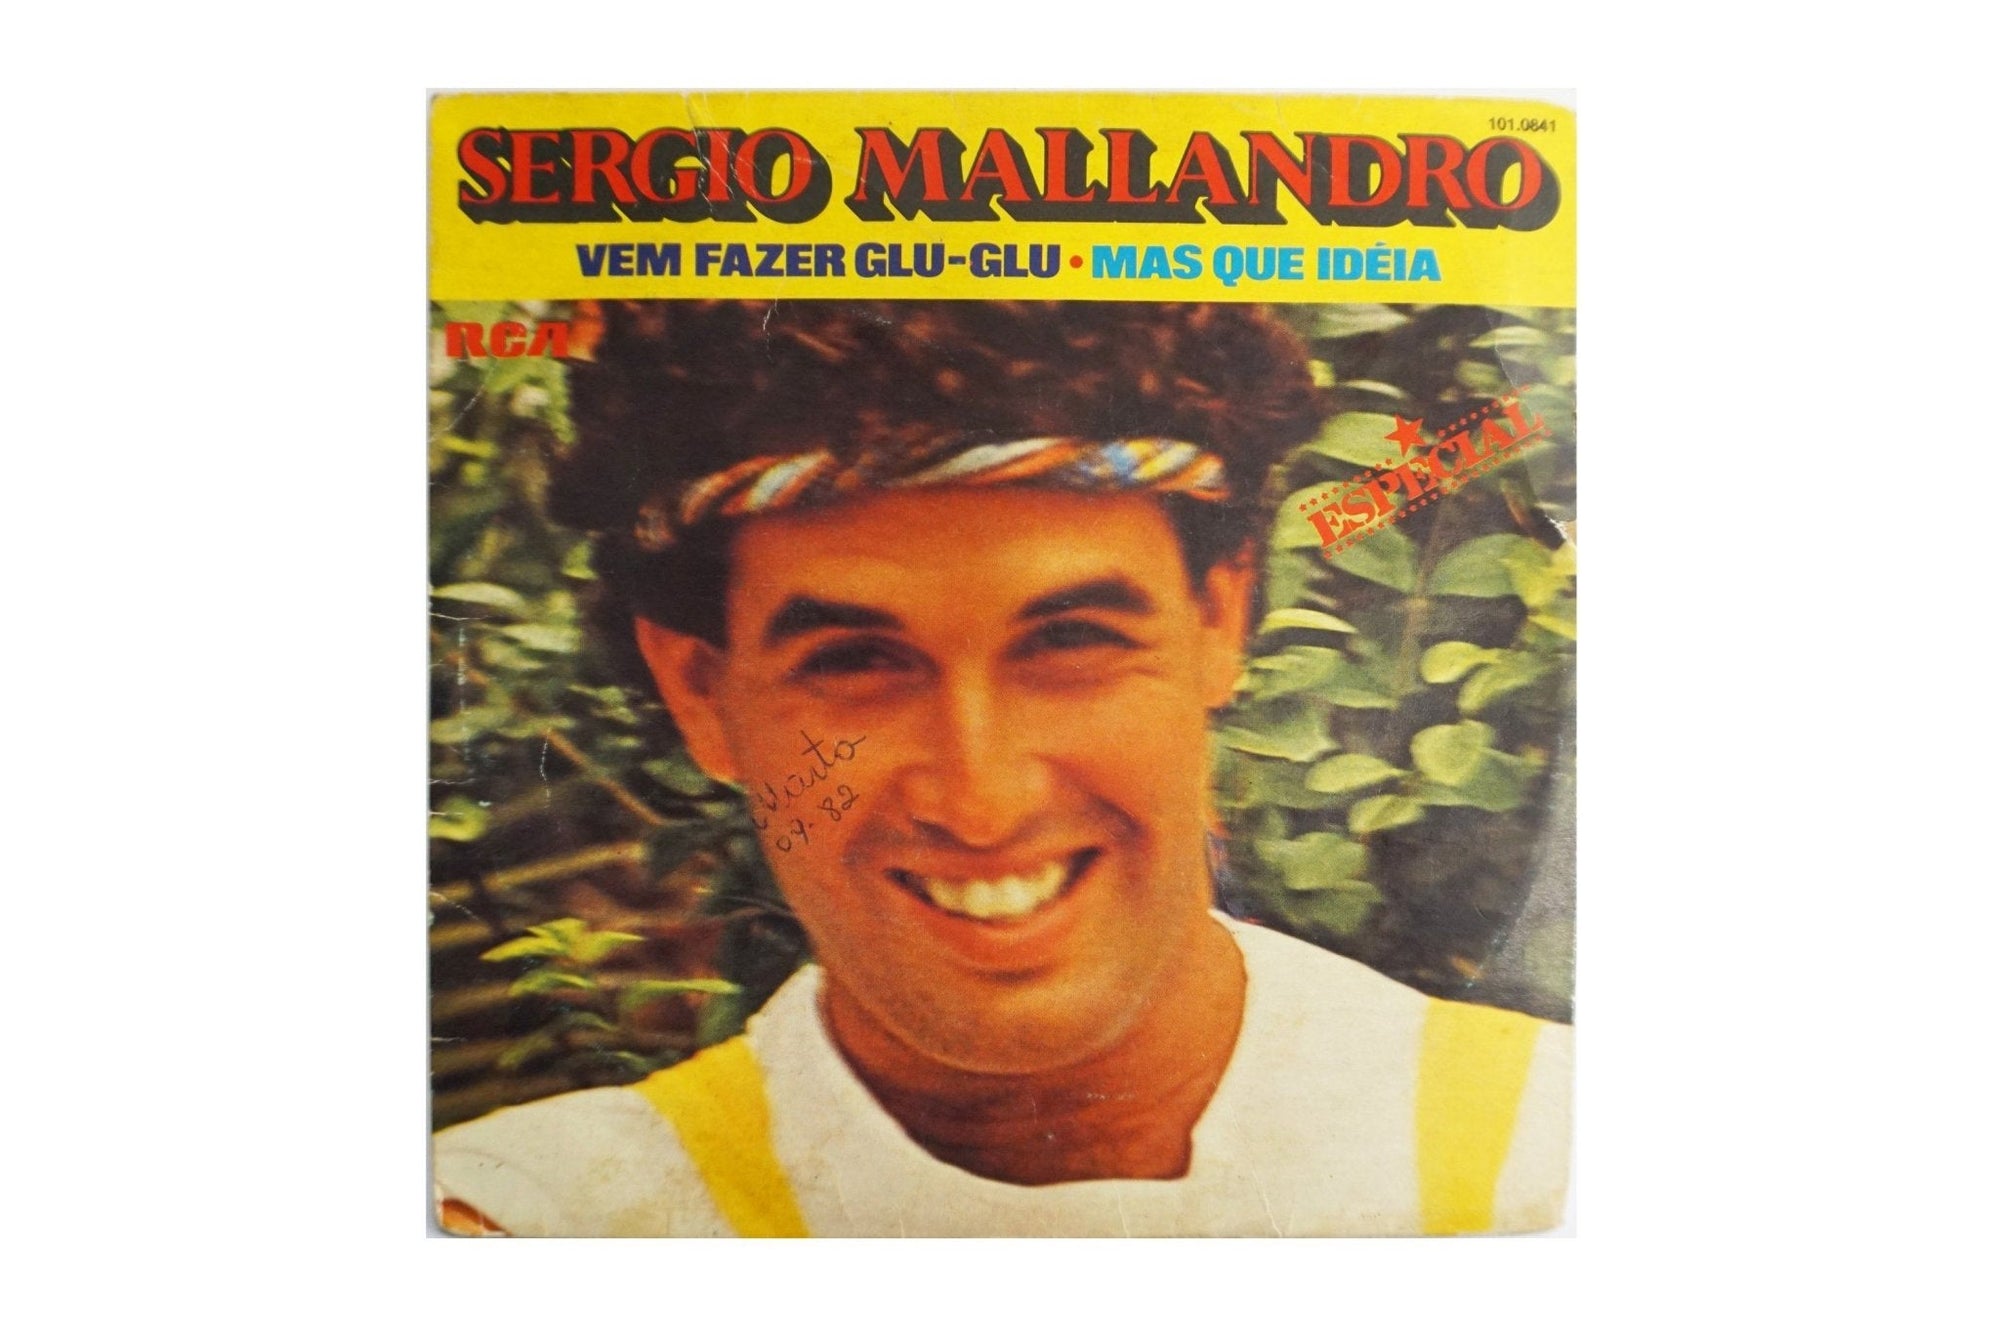 Sergio-Mallandro-Vem-Fazer-Glu-Glu